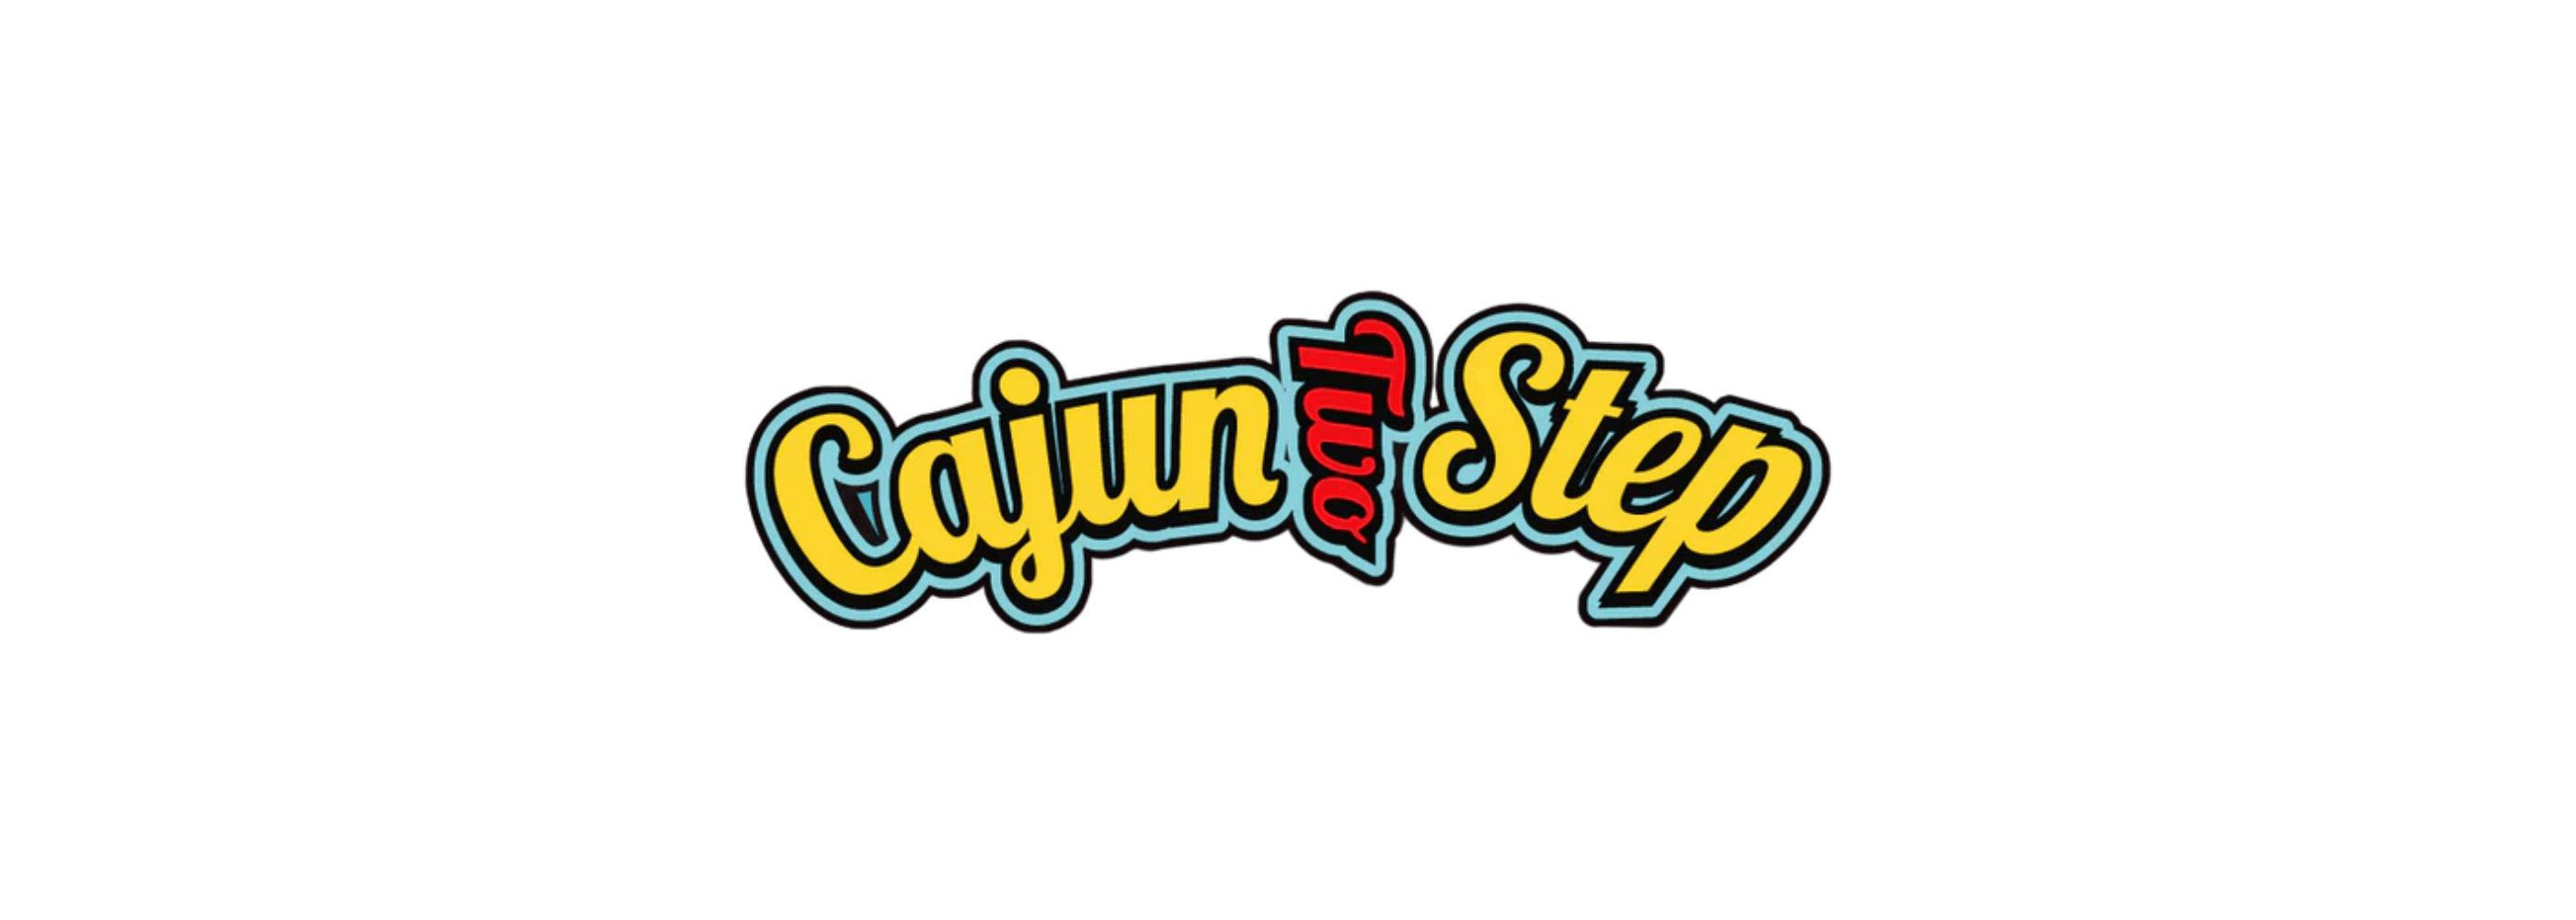 Cajun Two Step Fire Seasoning